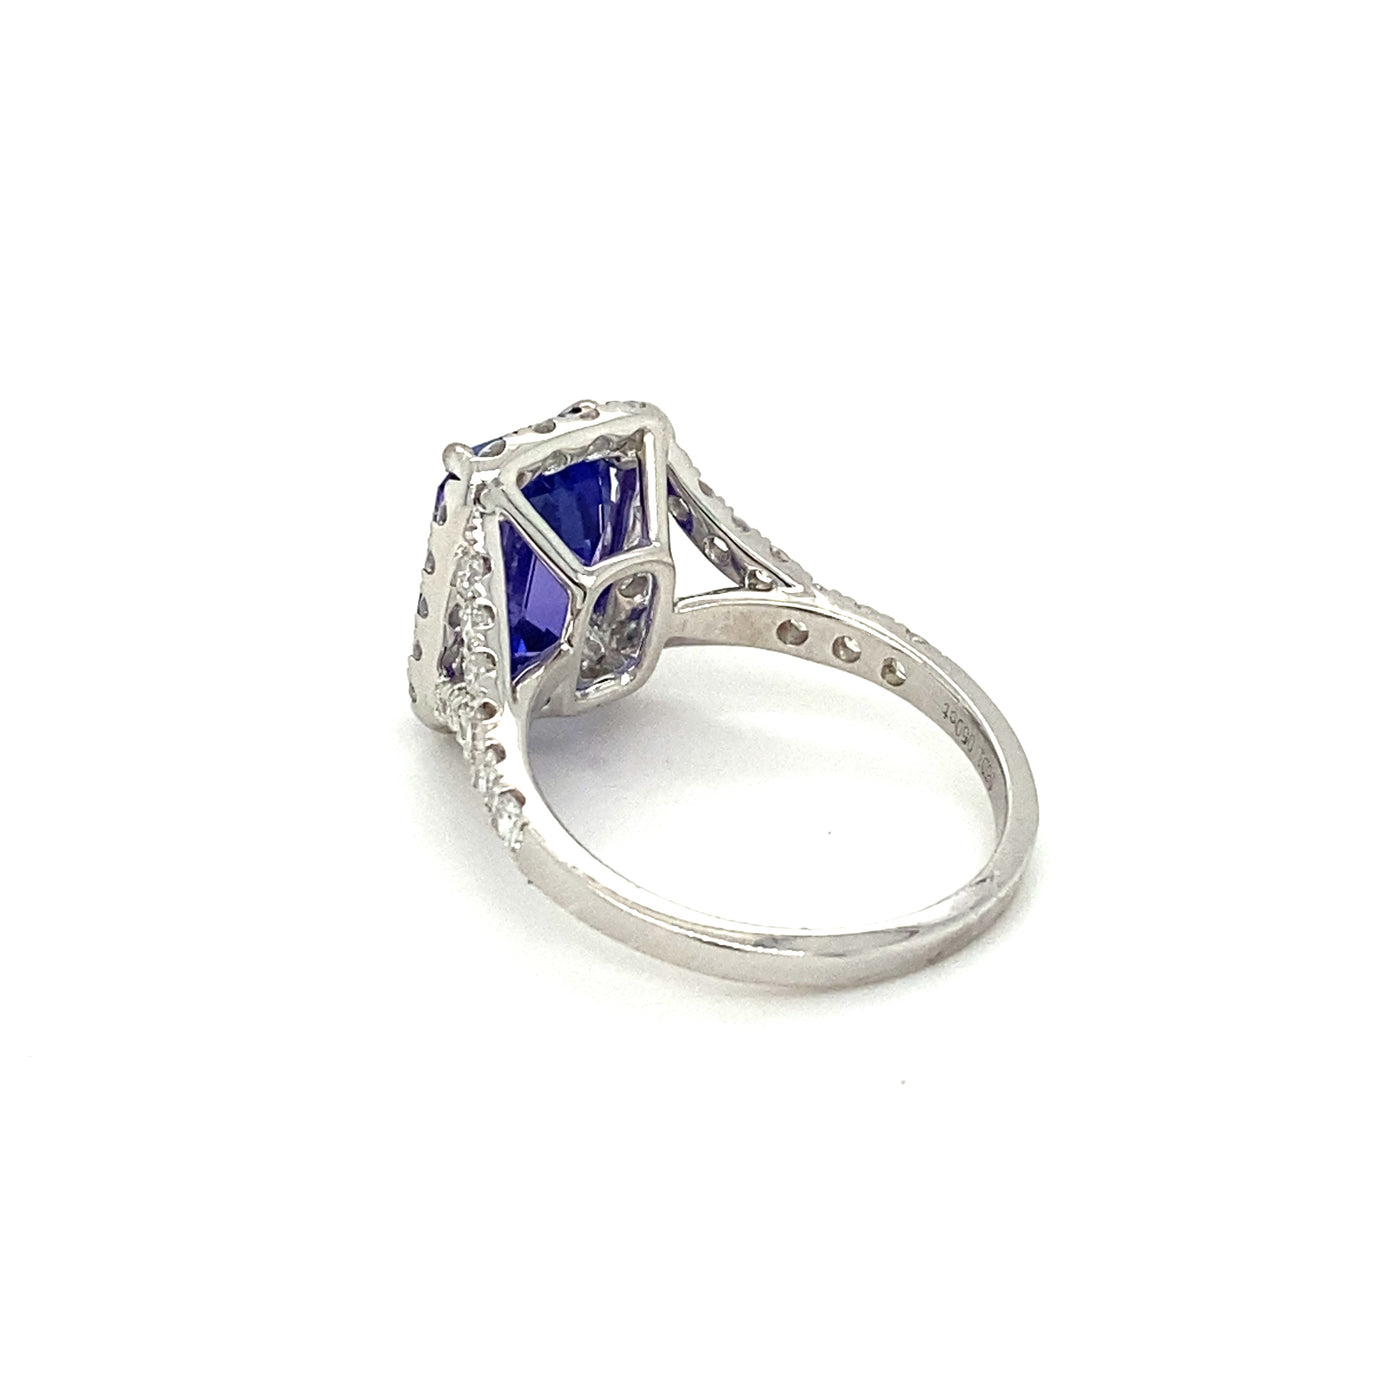 Emerald Cut Tanzanite & Diamond Halo Ring